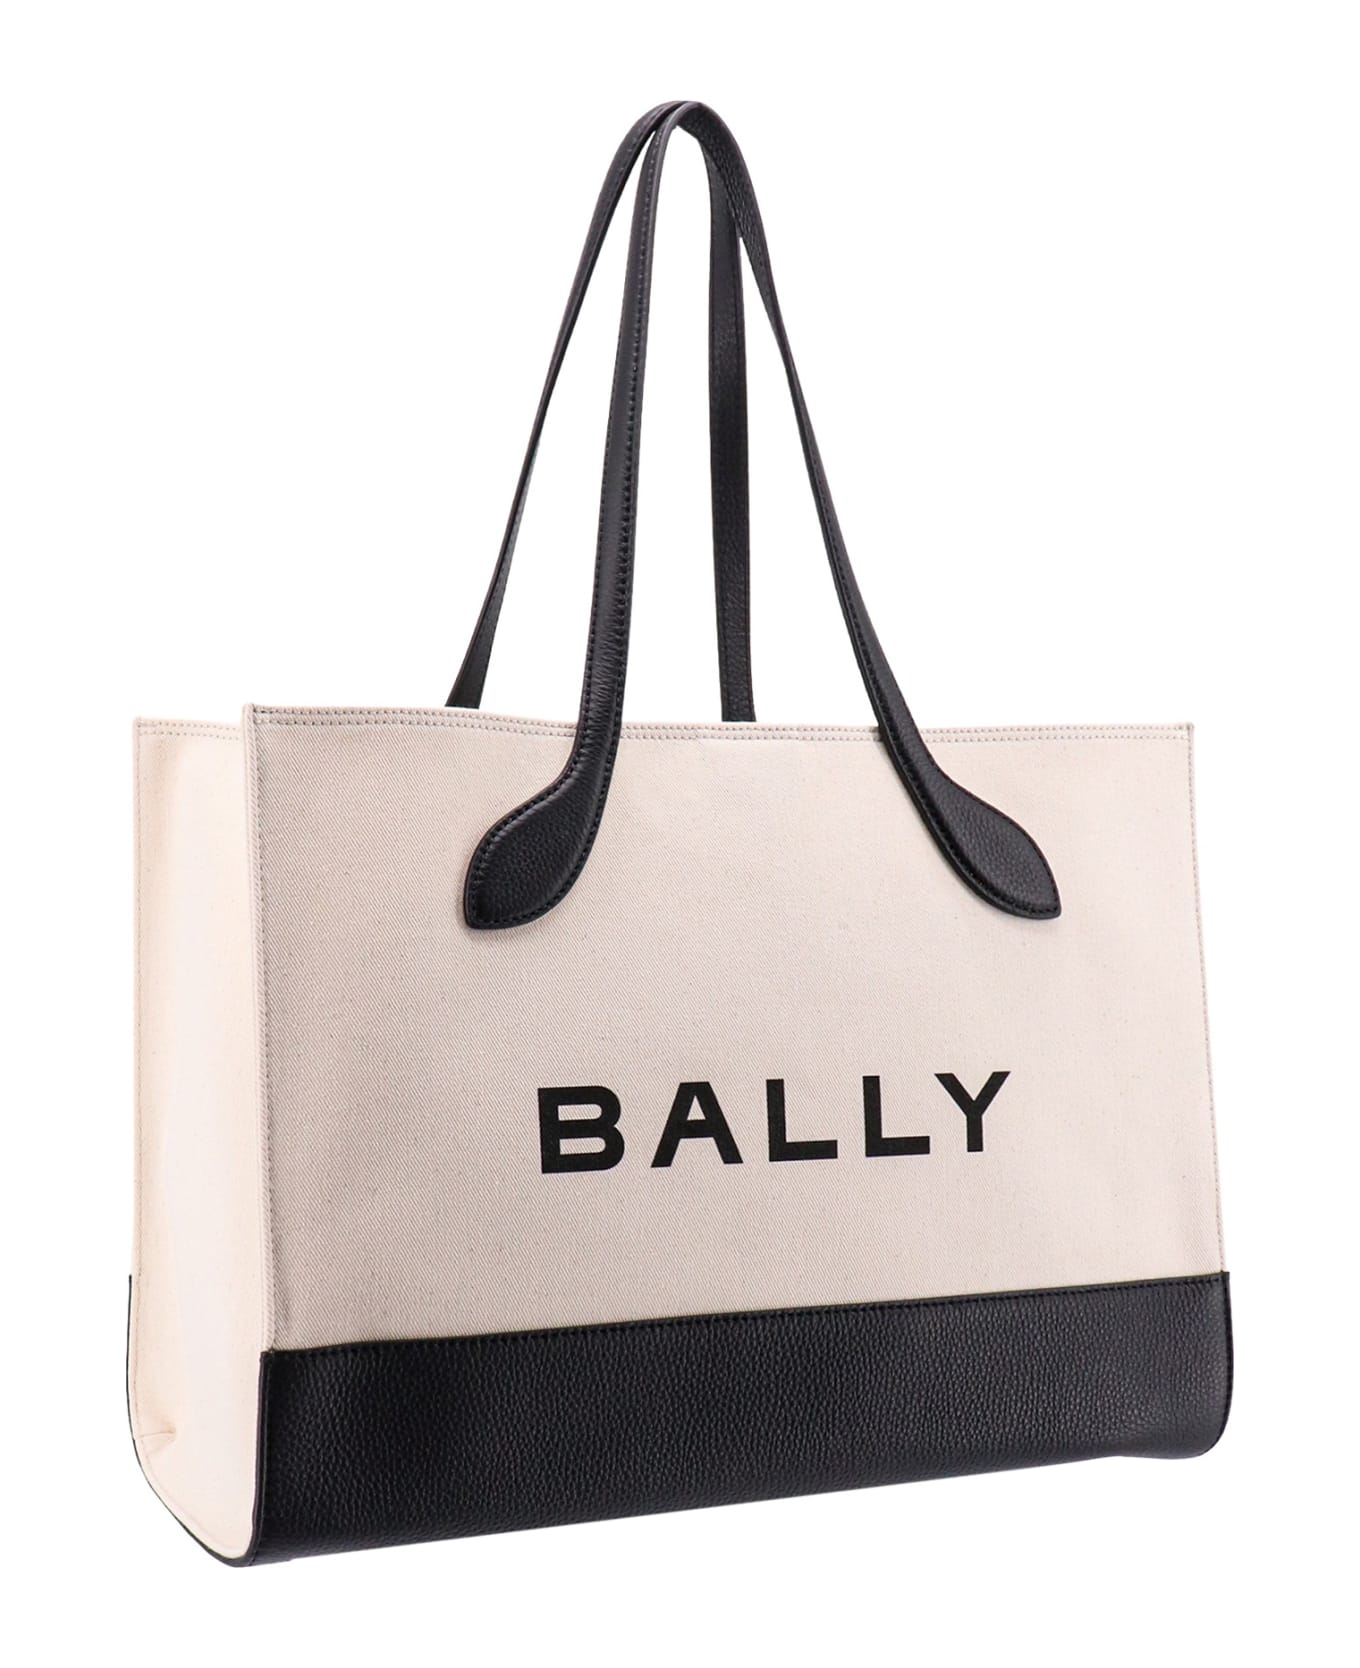 Bally Shoulder Bag - White